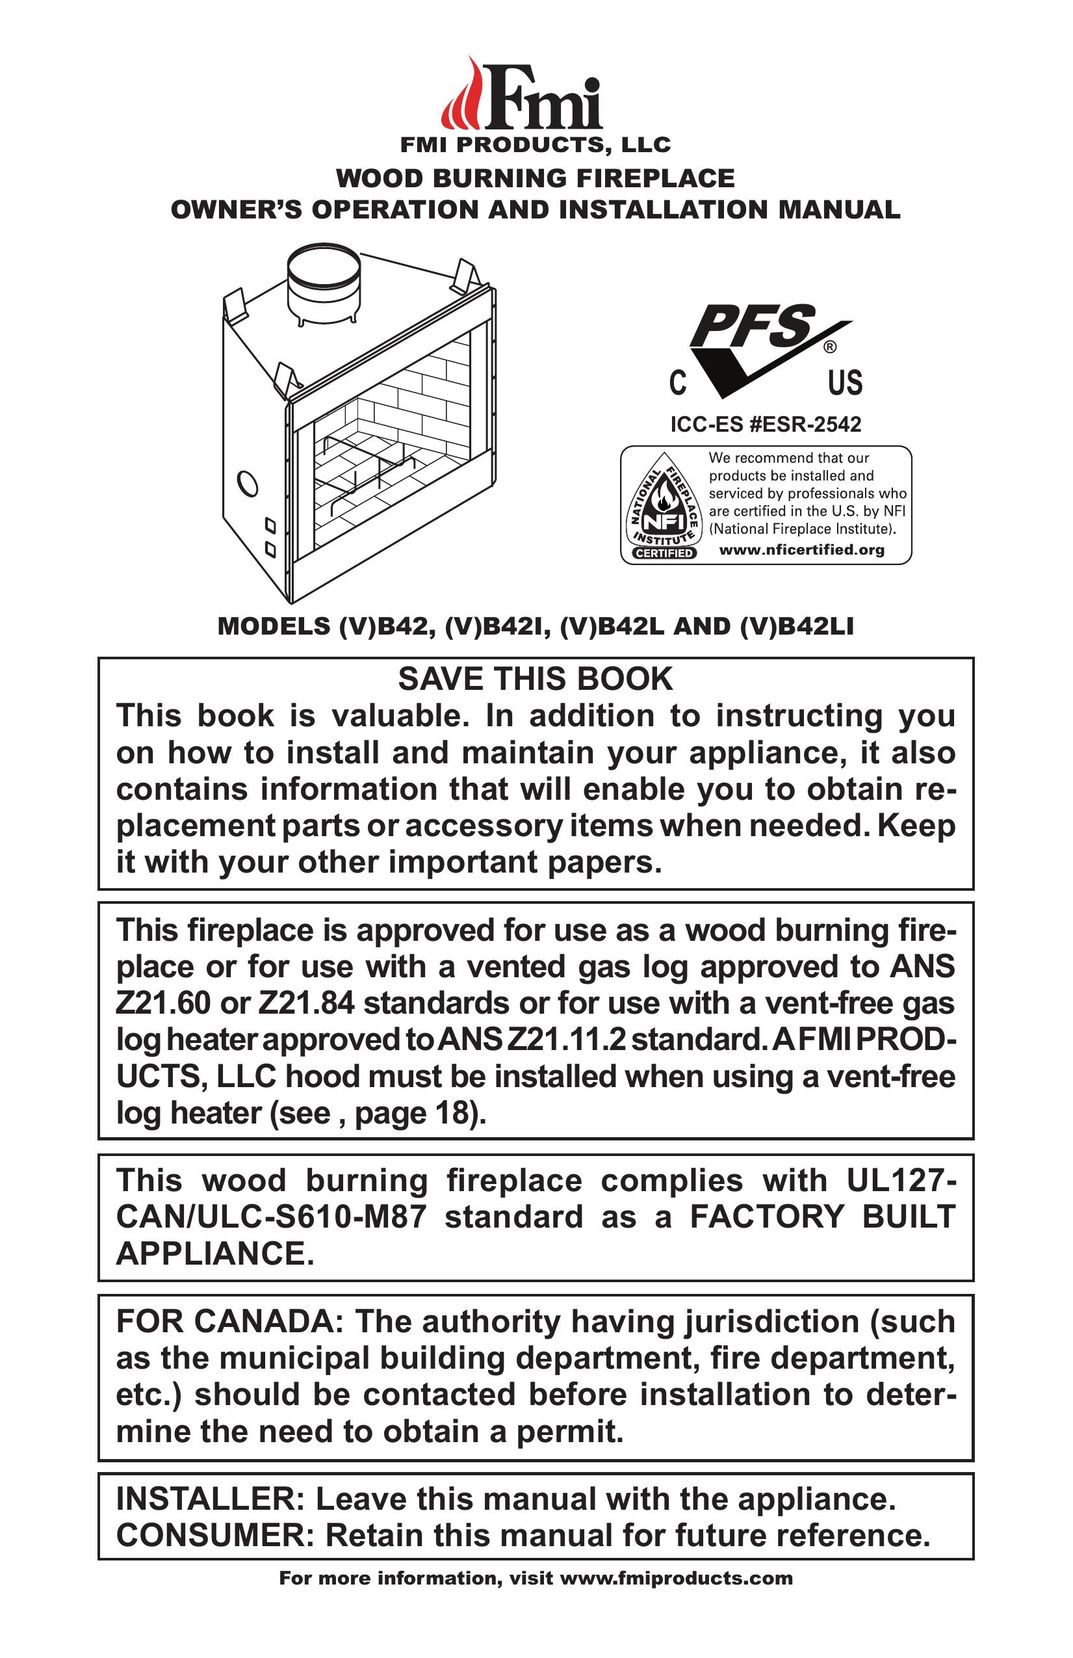 FMI (V)B42L Indoor Fireplace User Manual